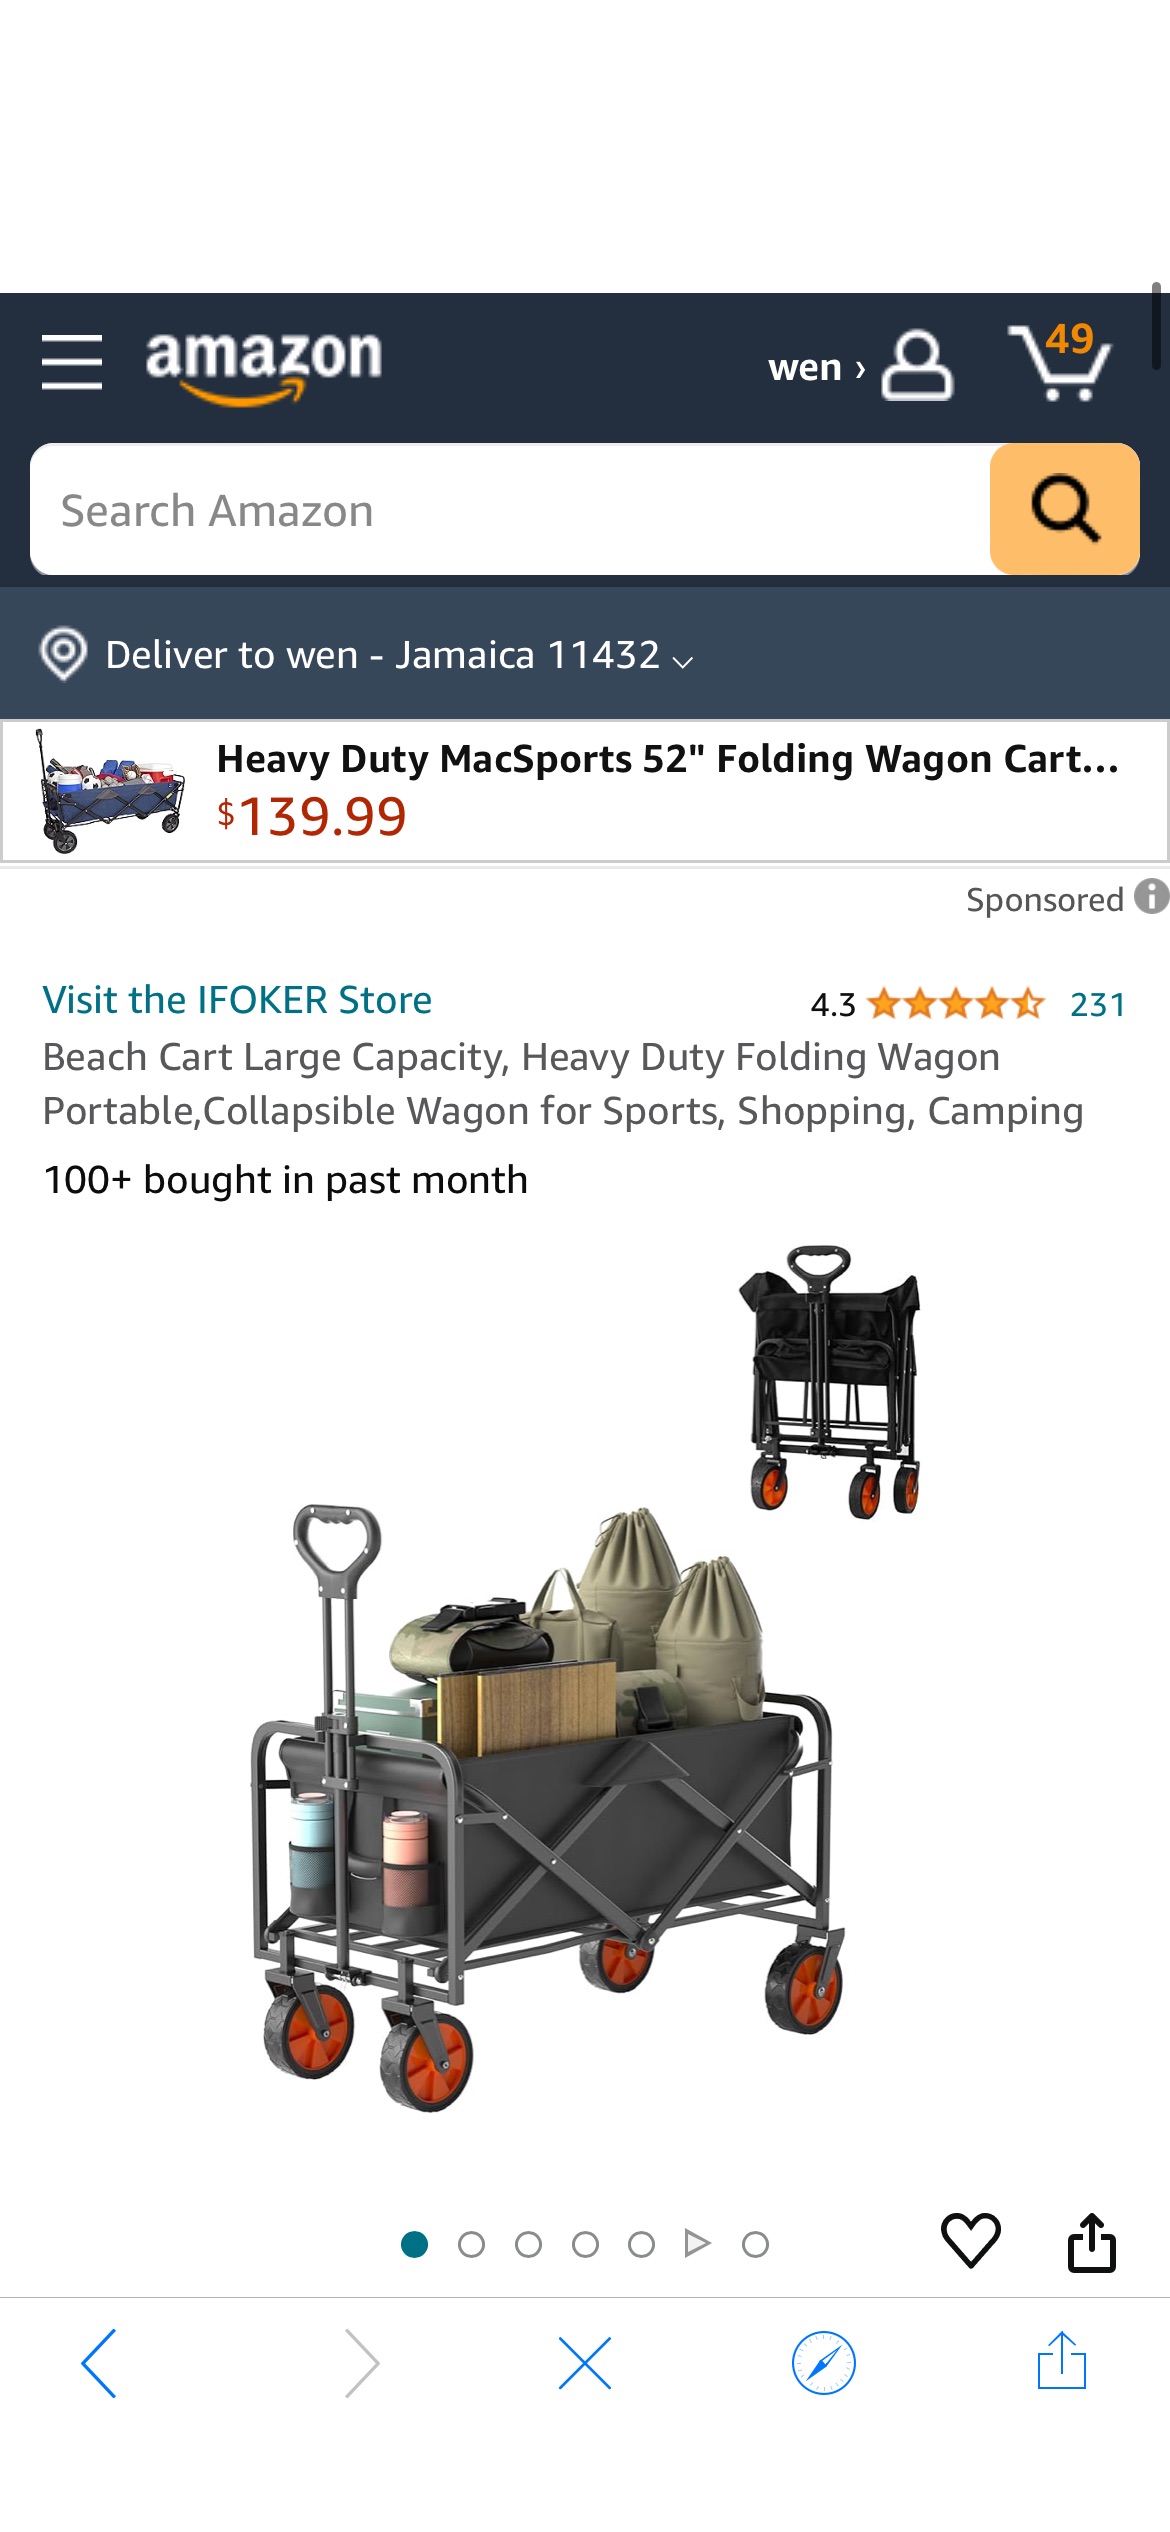 Amazon.com: IFOKER Beach Cart Large Capacity, Heavy Duty Folding Wagon Portable,Collapsible Wagon for Sports, Shopping, Camping : Patio, Lawn & Garden